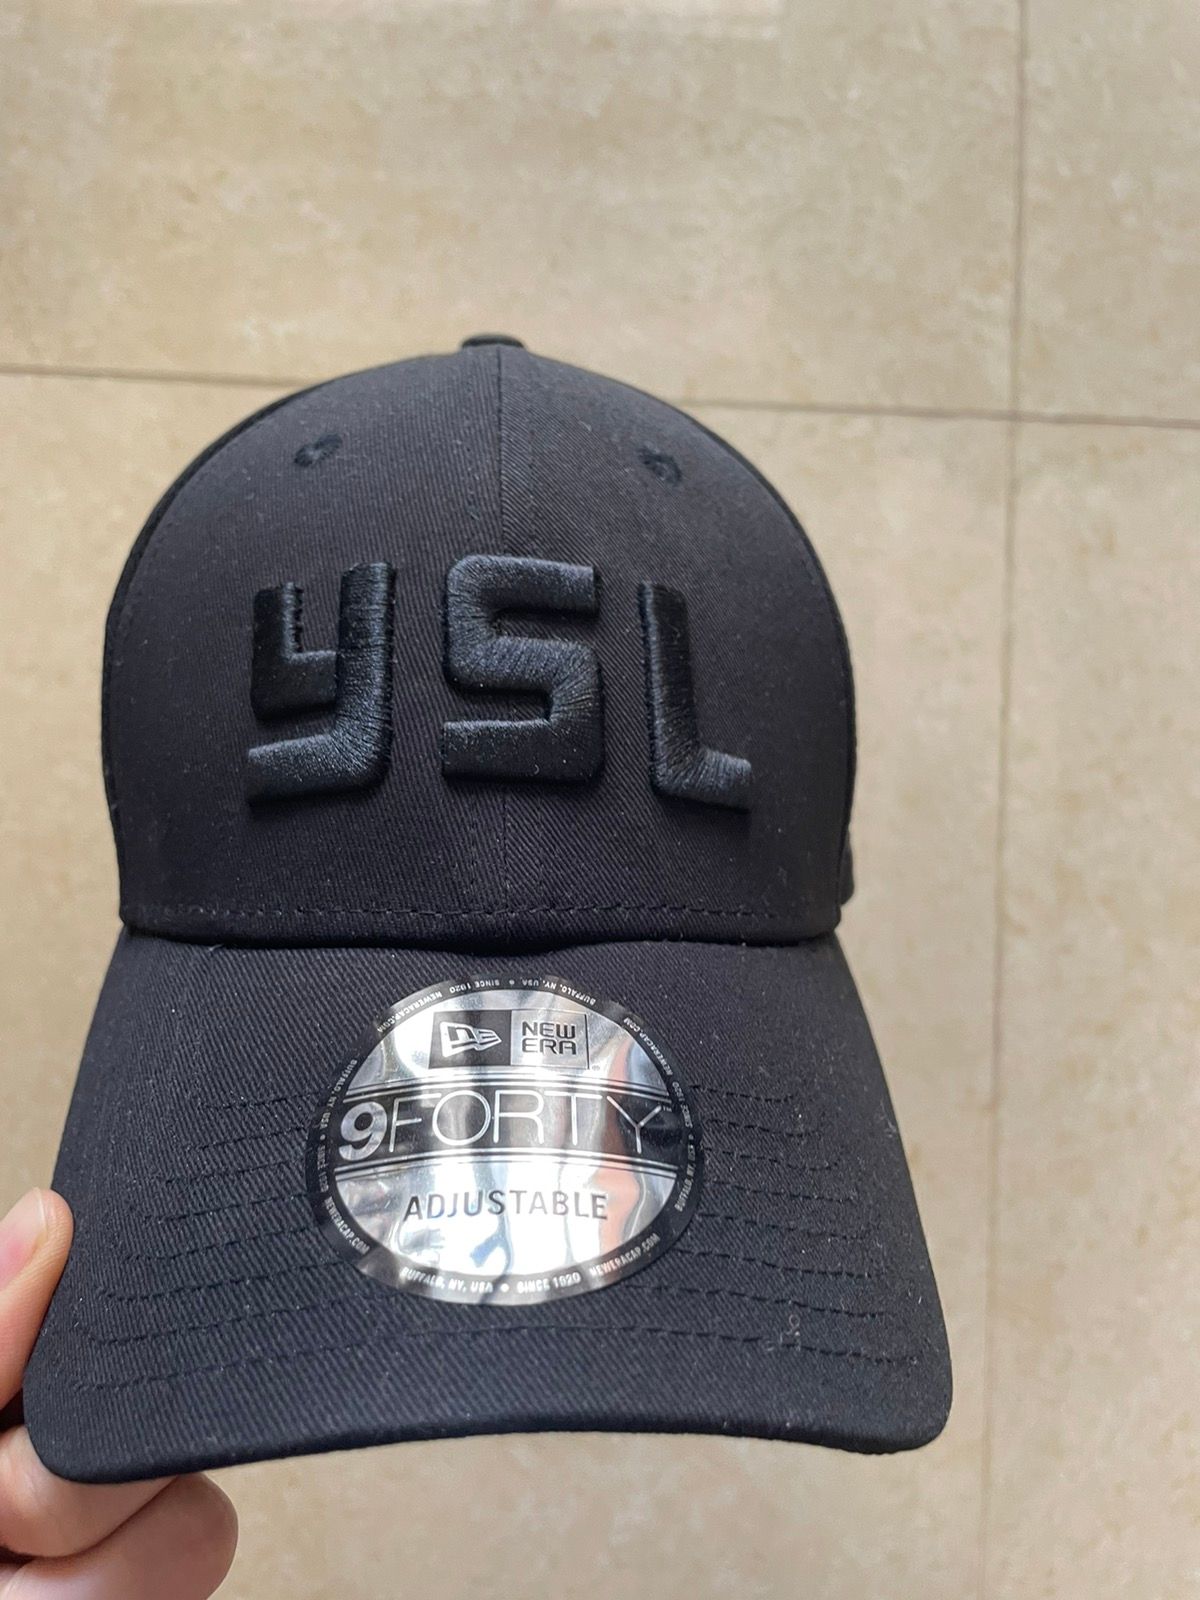 ysl new era hat